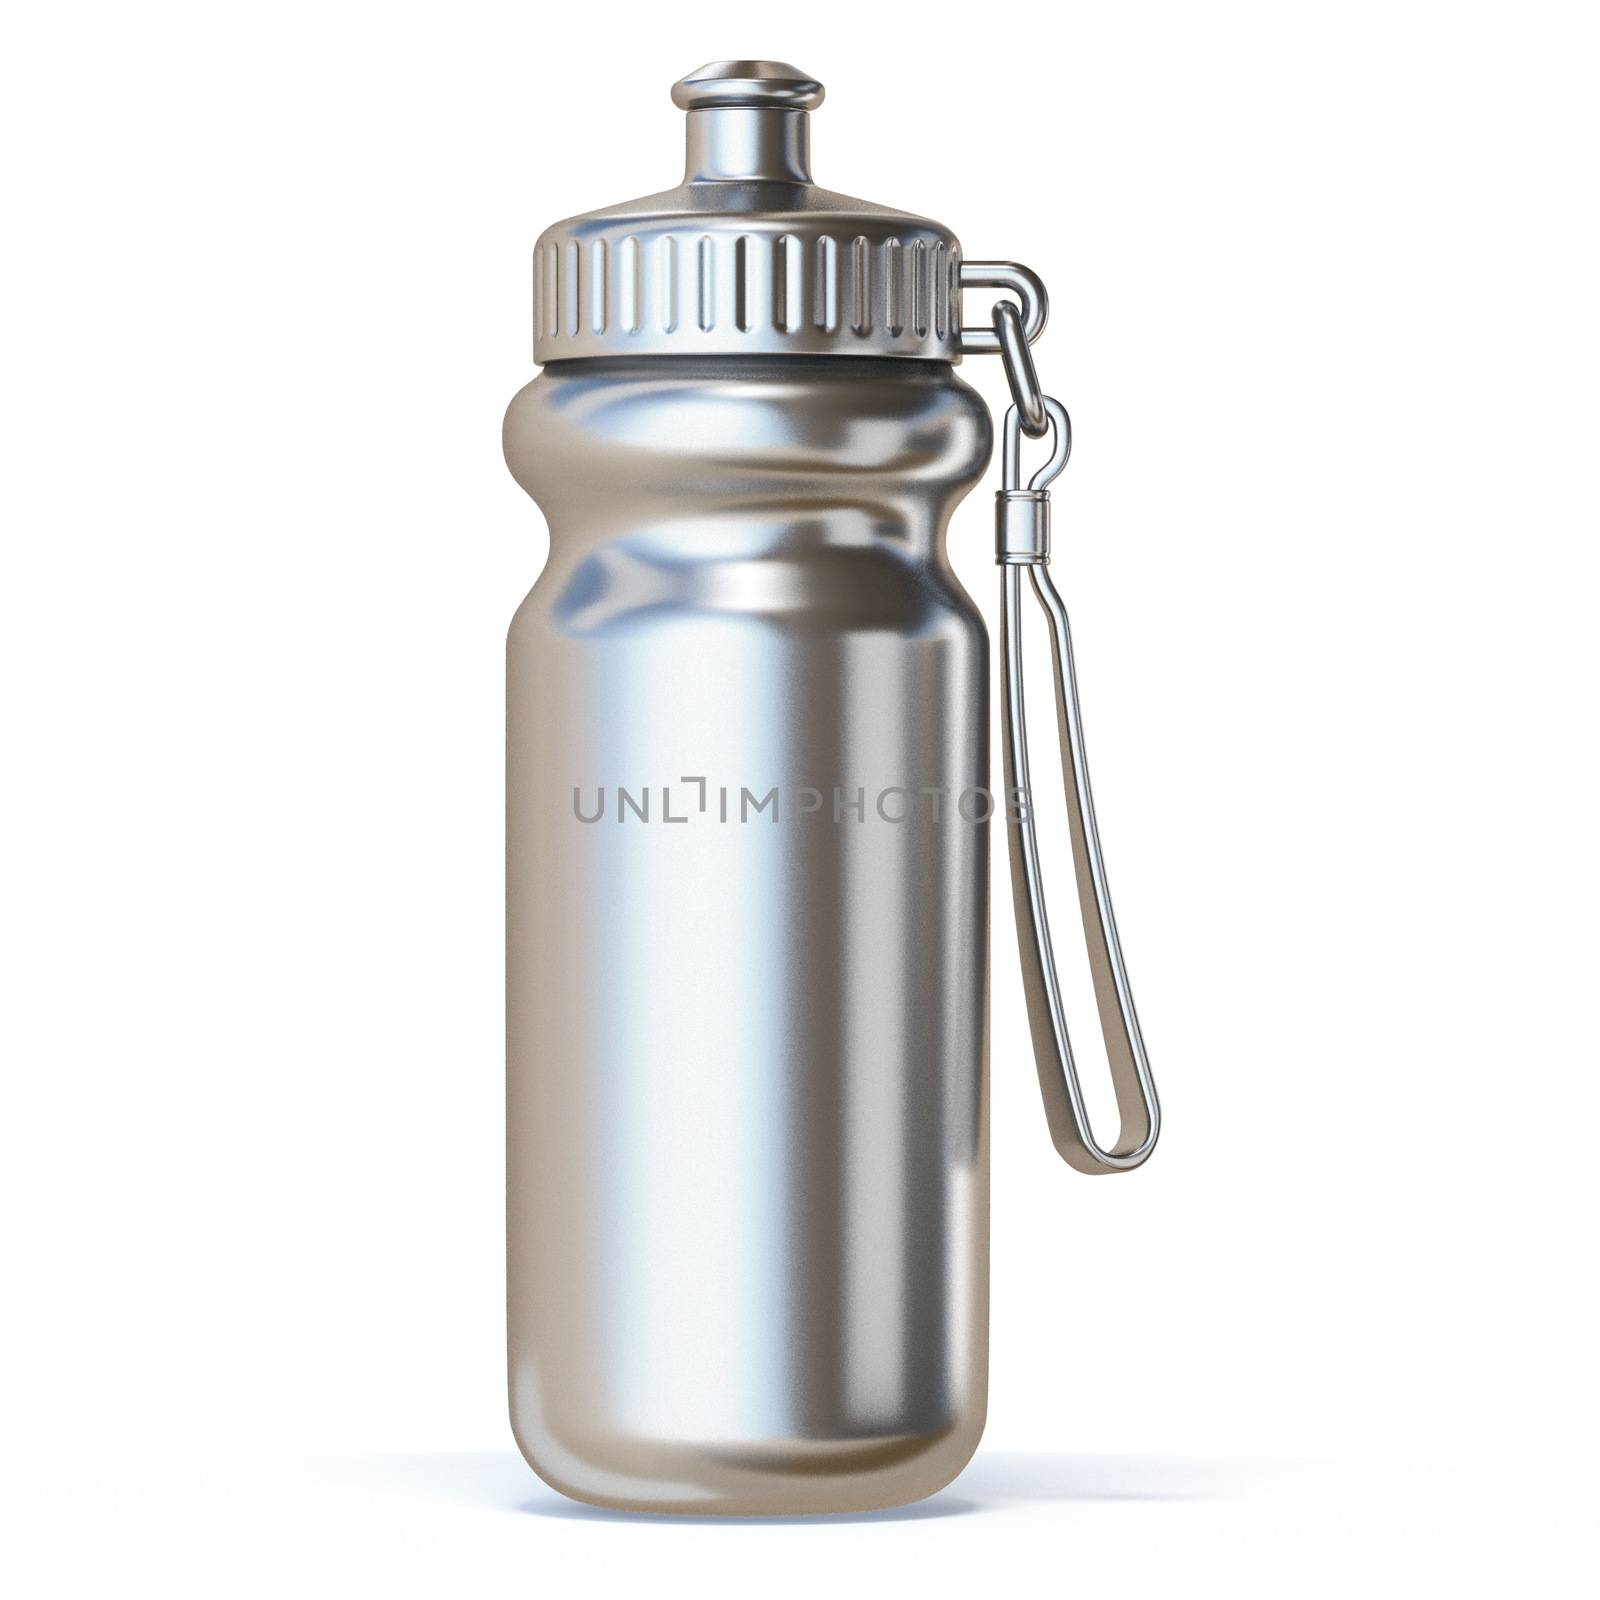 Silver sport water bottle 3D render illustration isolated on white background